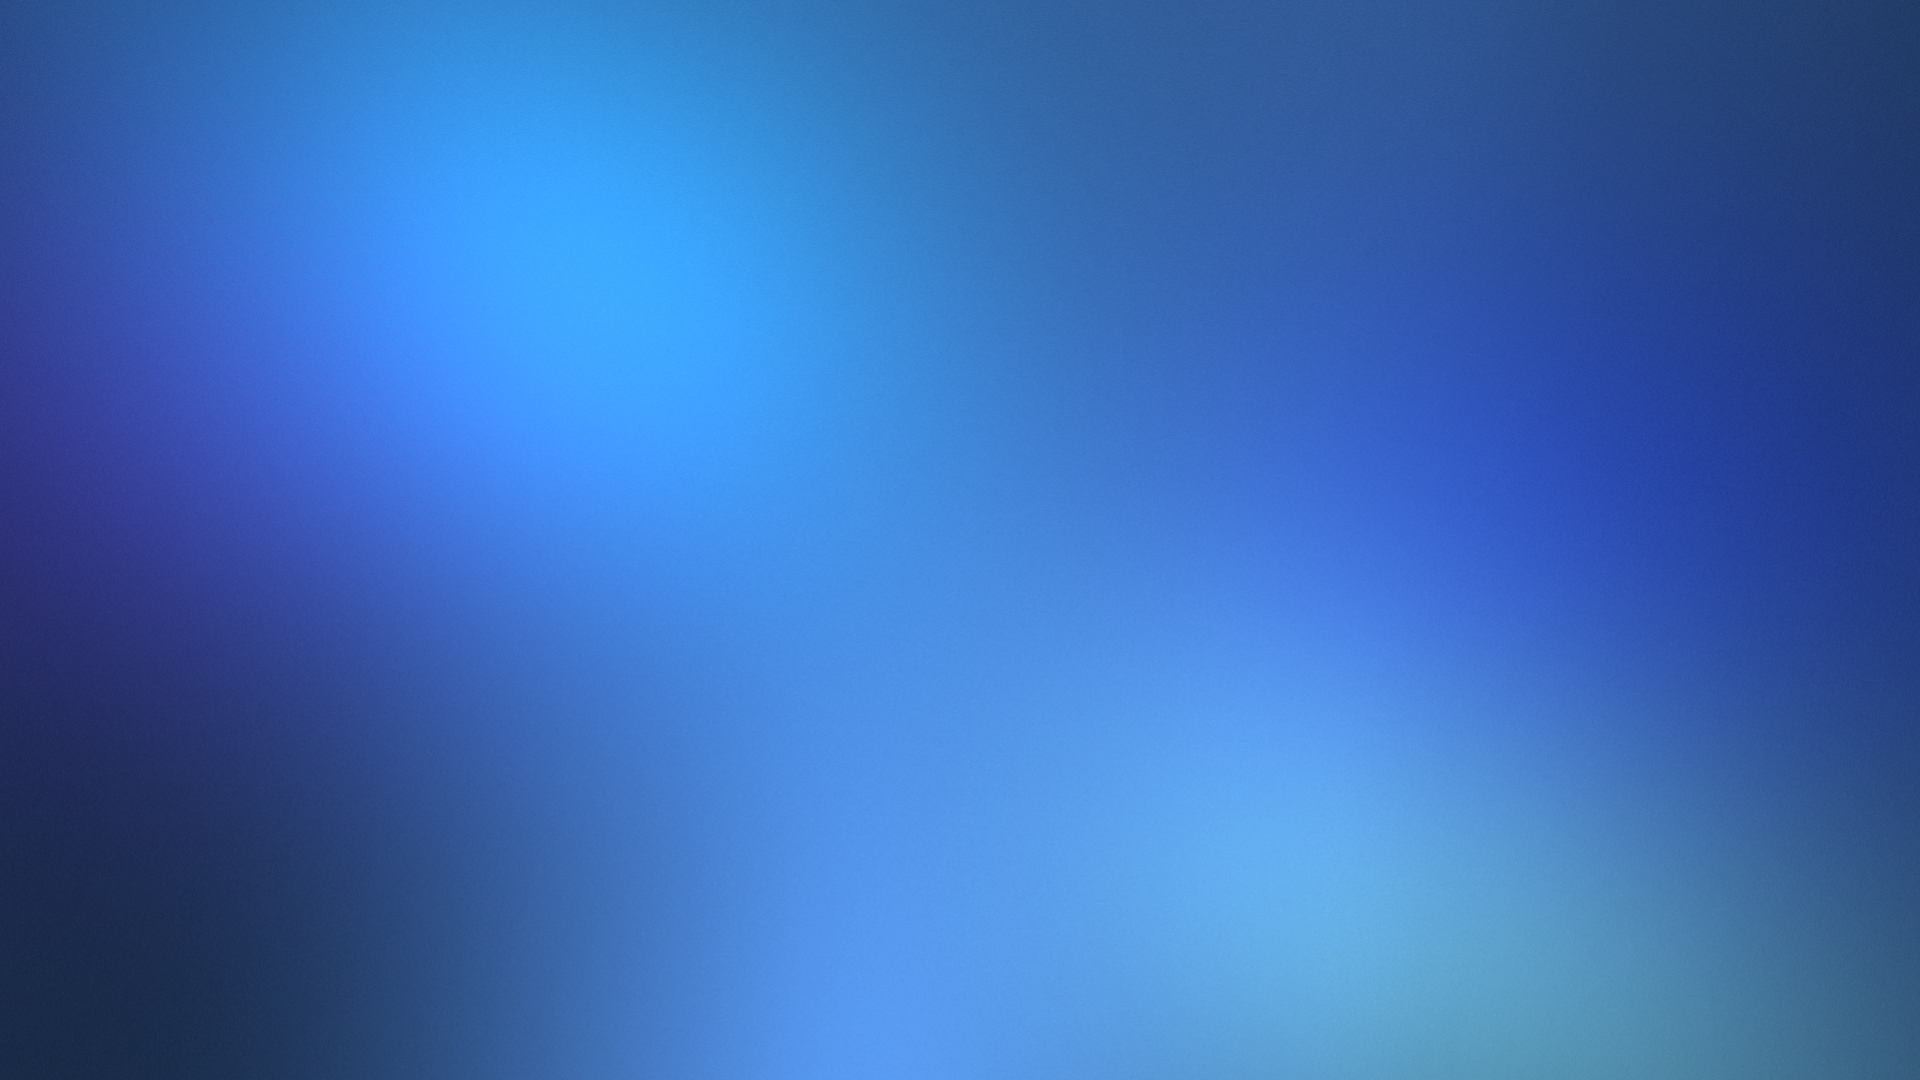 fondo de pantalla hd tablet 1280x800,azul,cielo,azul cobalto,tiempo de día,azul eléctrico